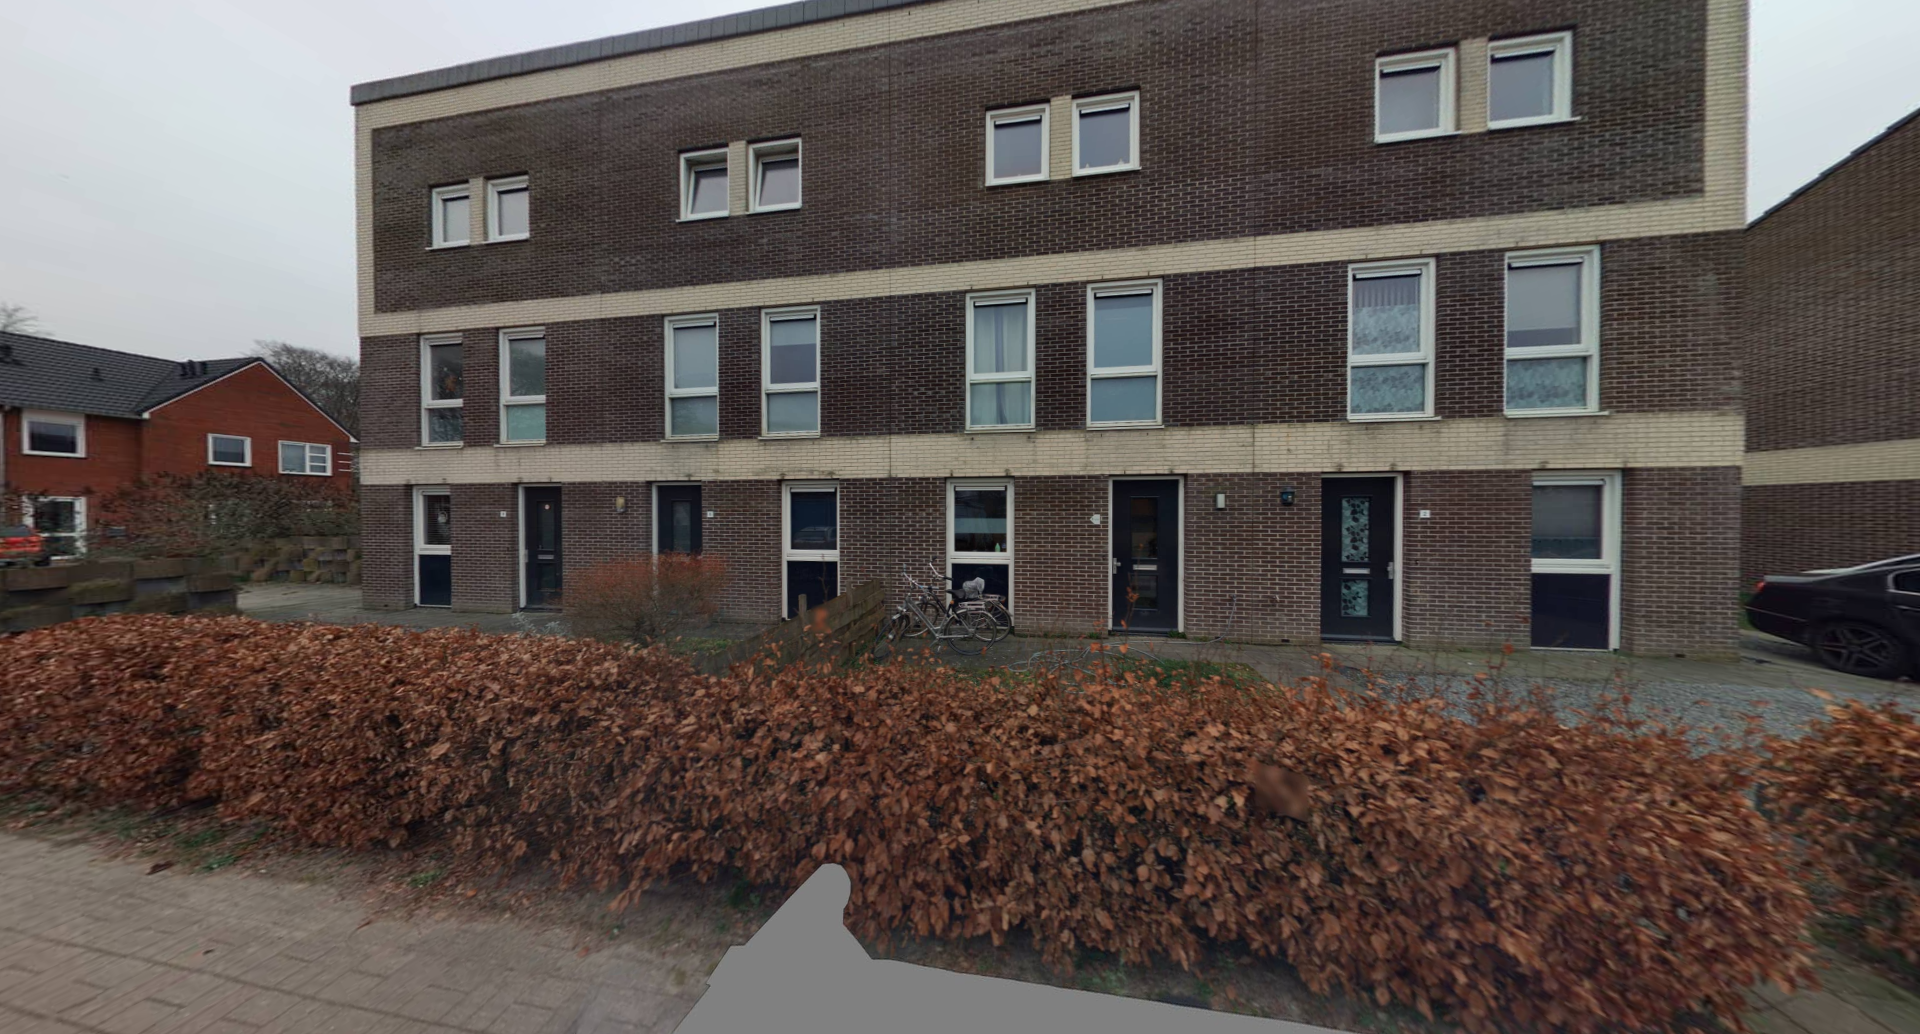 Wrongel 4, 8431 AE Oosterwolde, Nederland